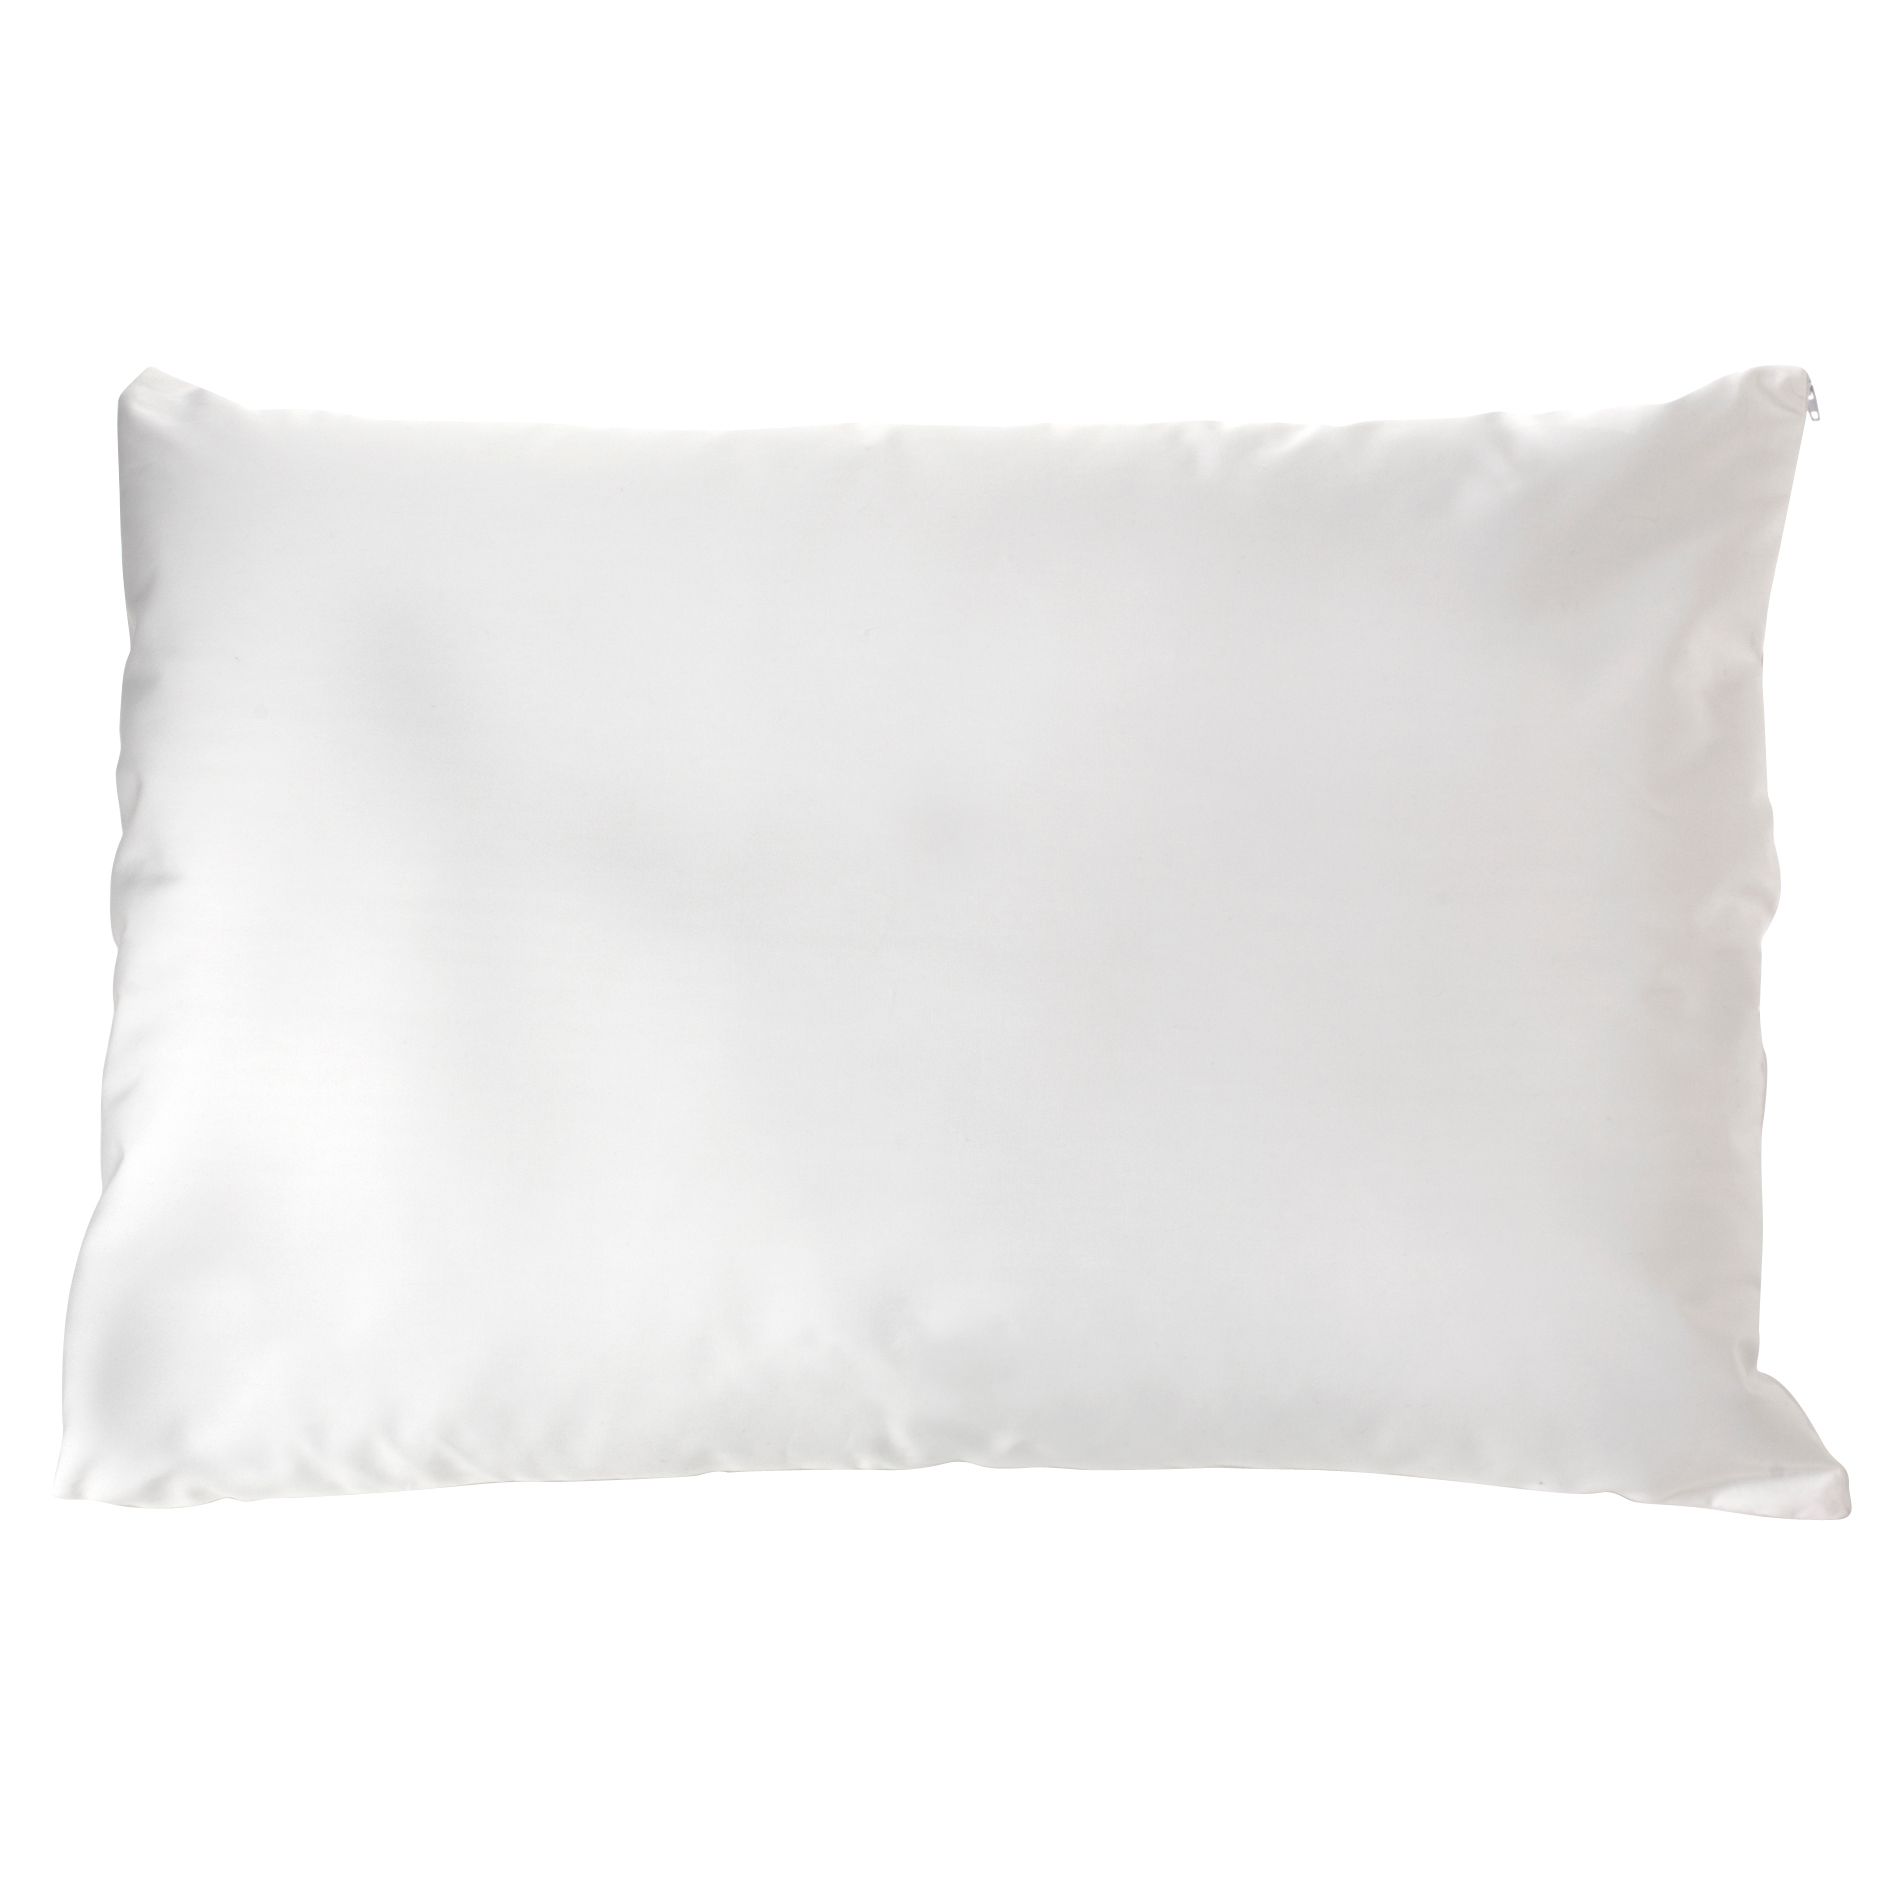 Allerease Deluxe HMT Pillow Protector